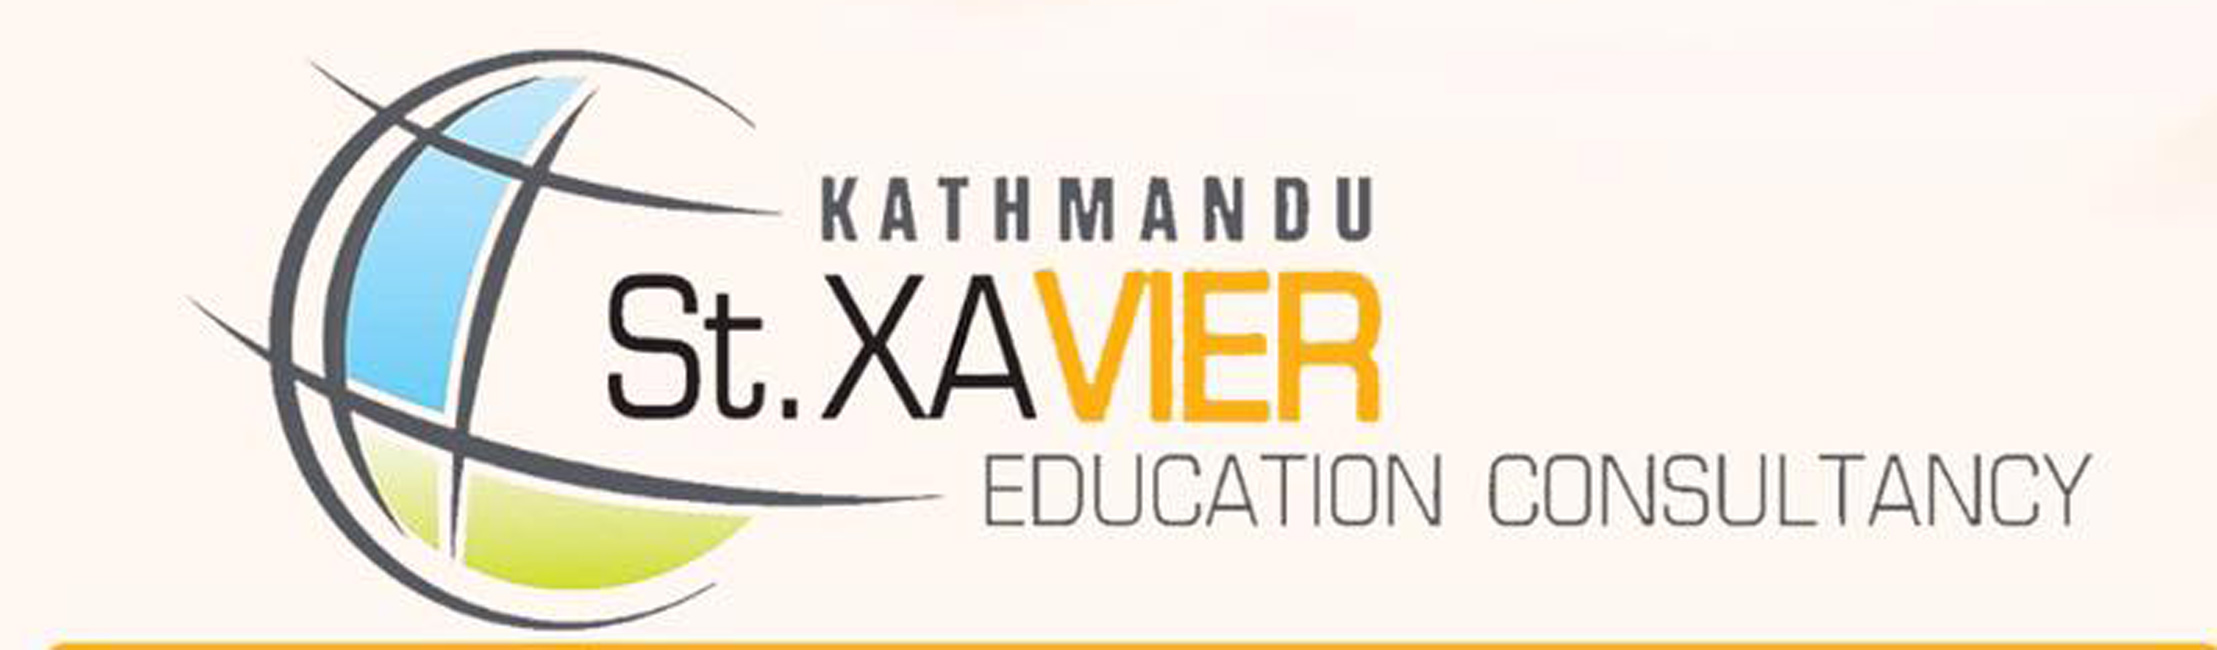 Kathmandu St.Xavier Education Consultancy